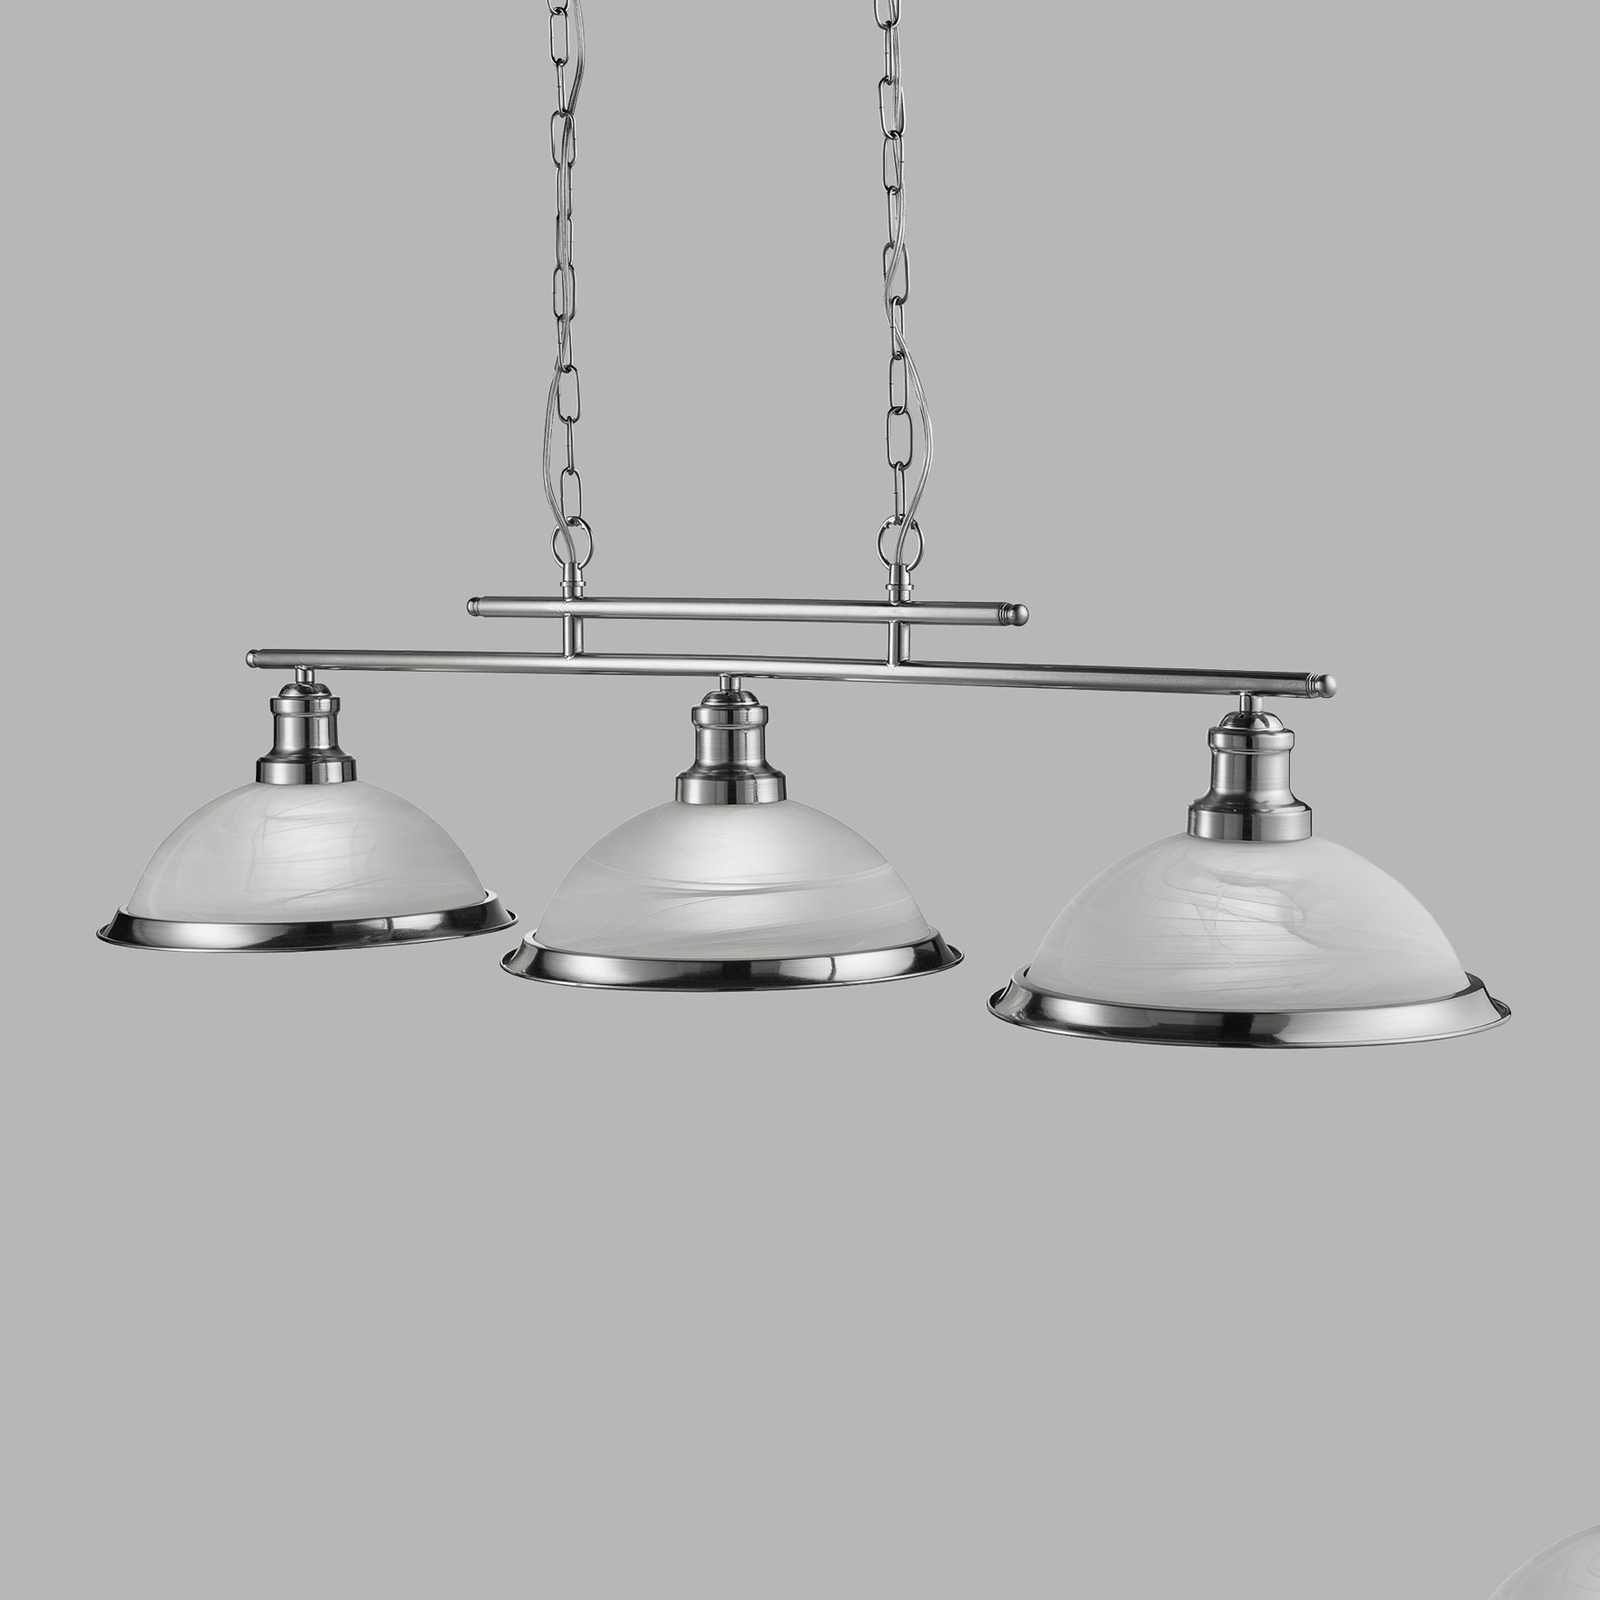 Bistro hanging light, 3-bulb, silver